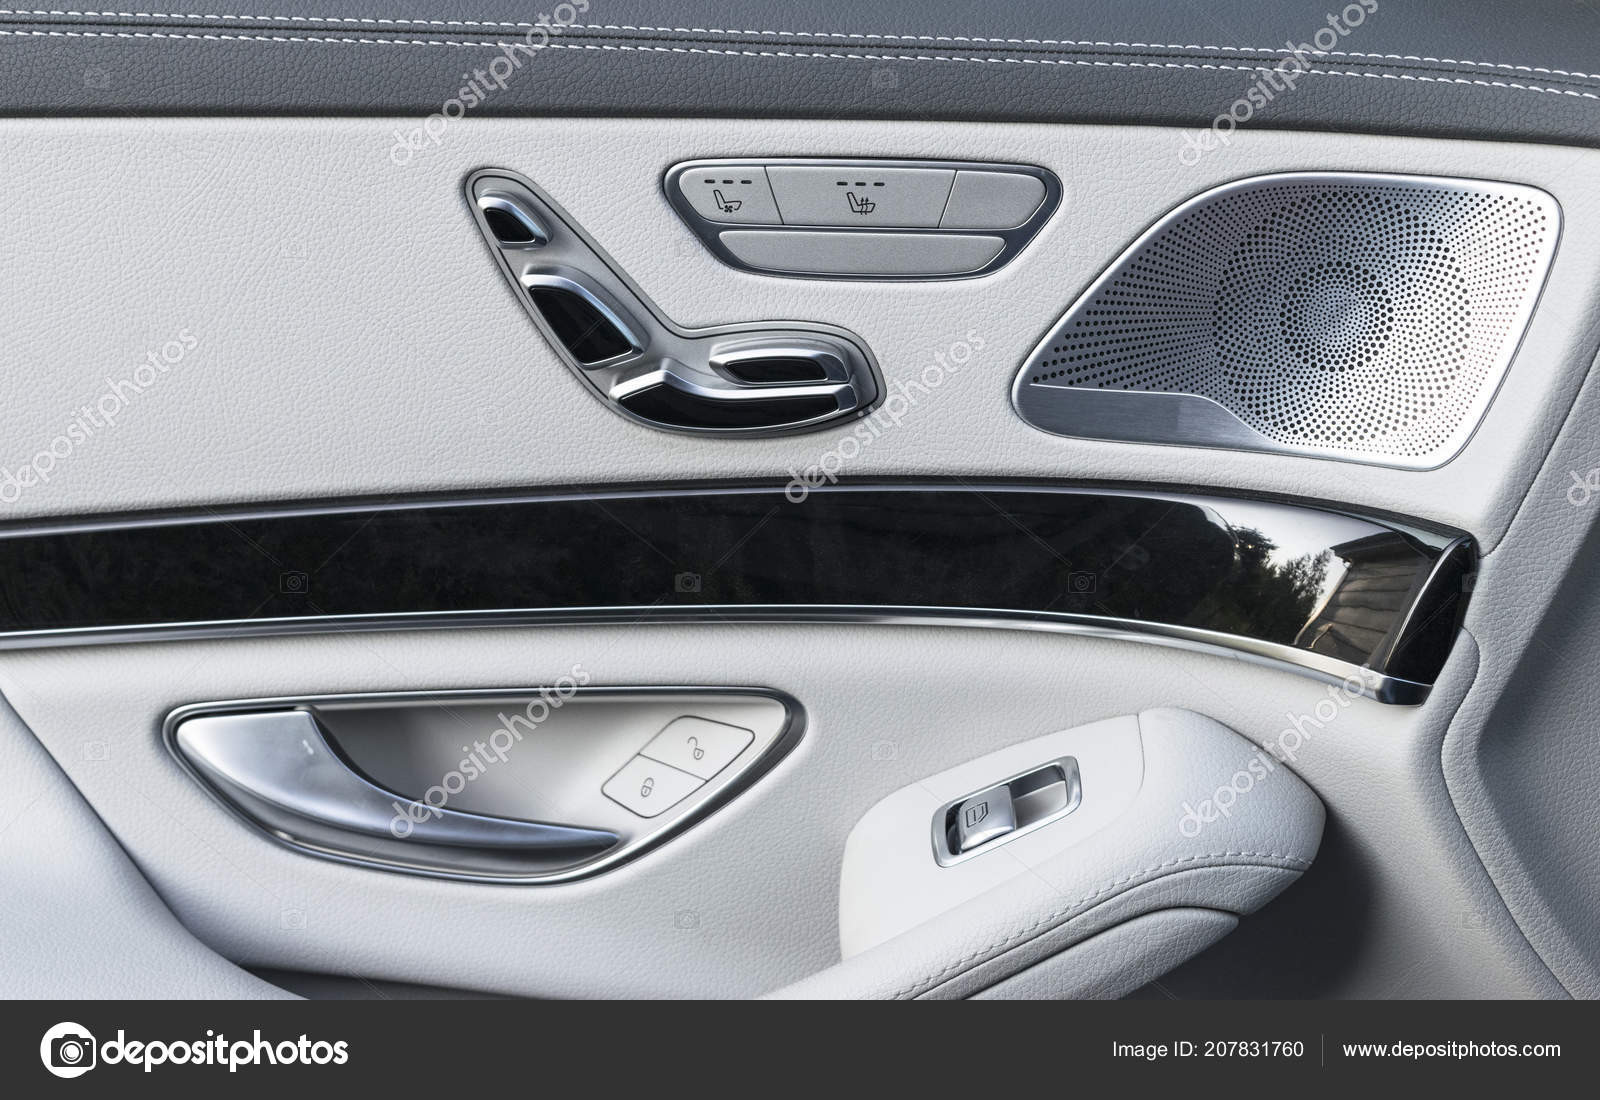 Ventilation Deck Luxury Car Interior Door Handle Power Seat